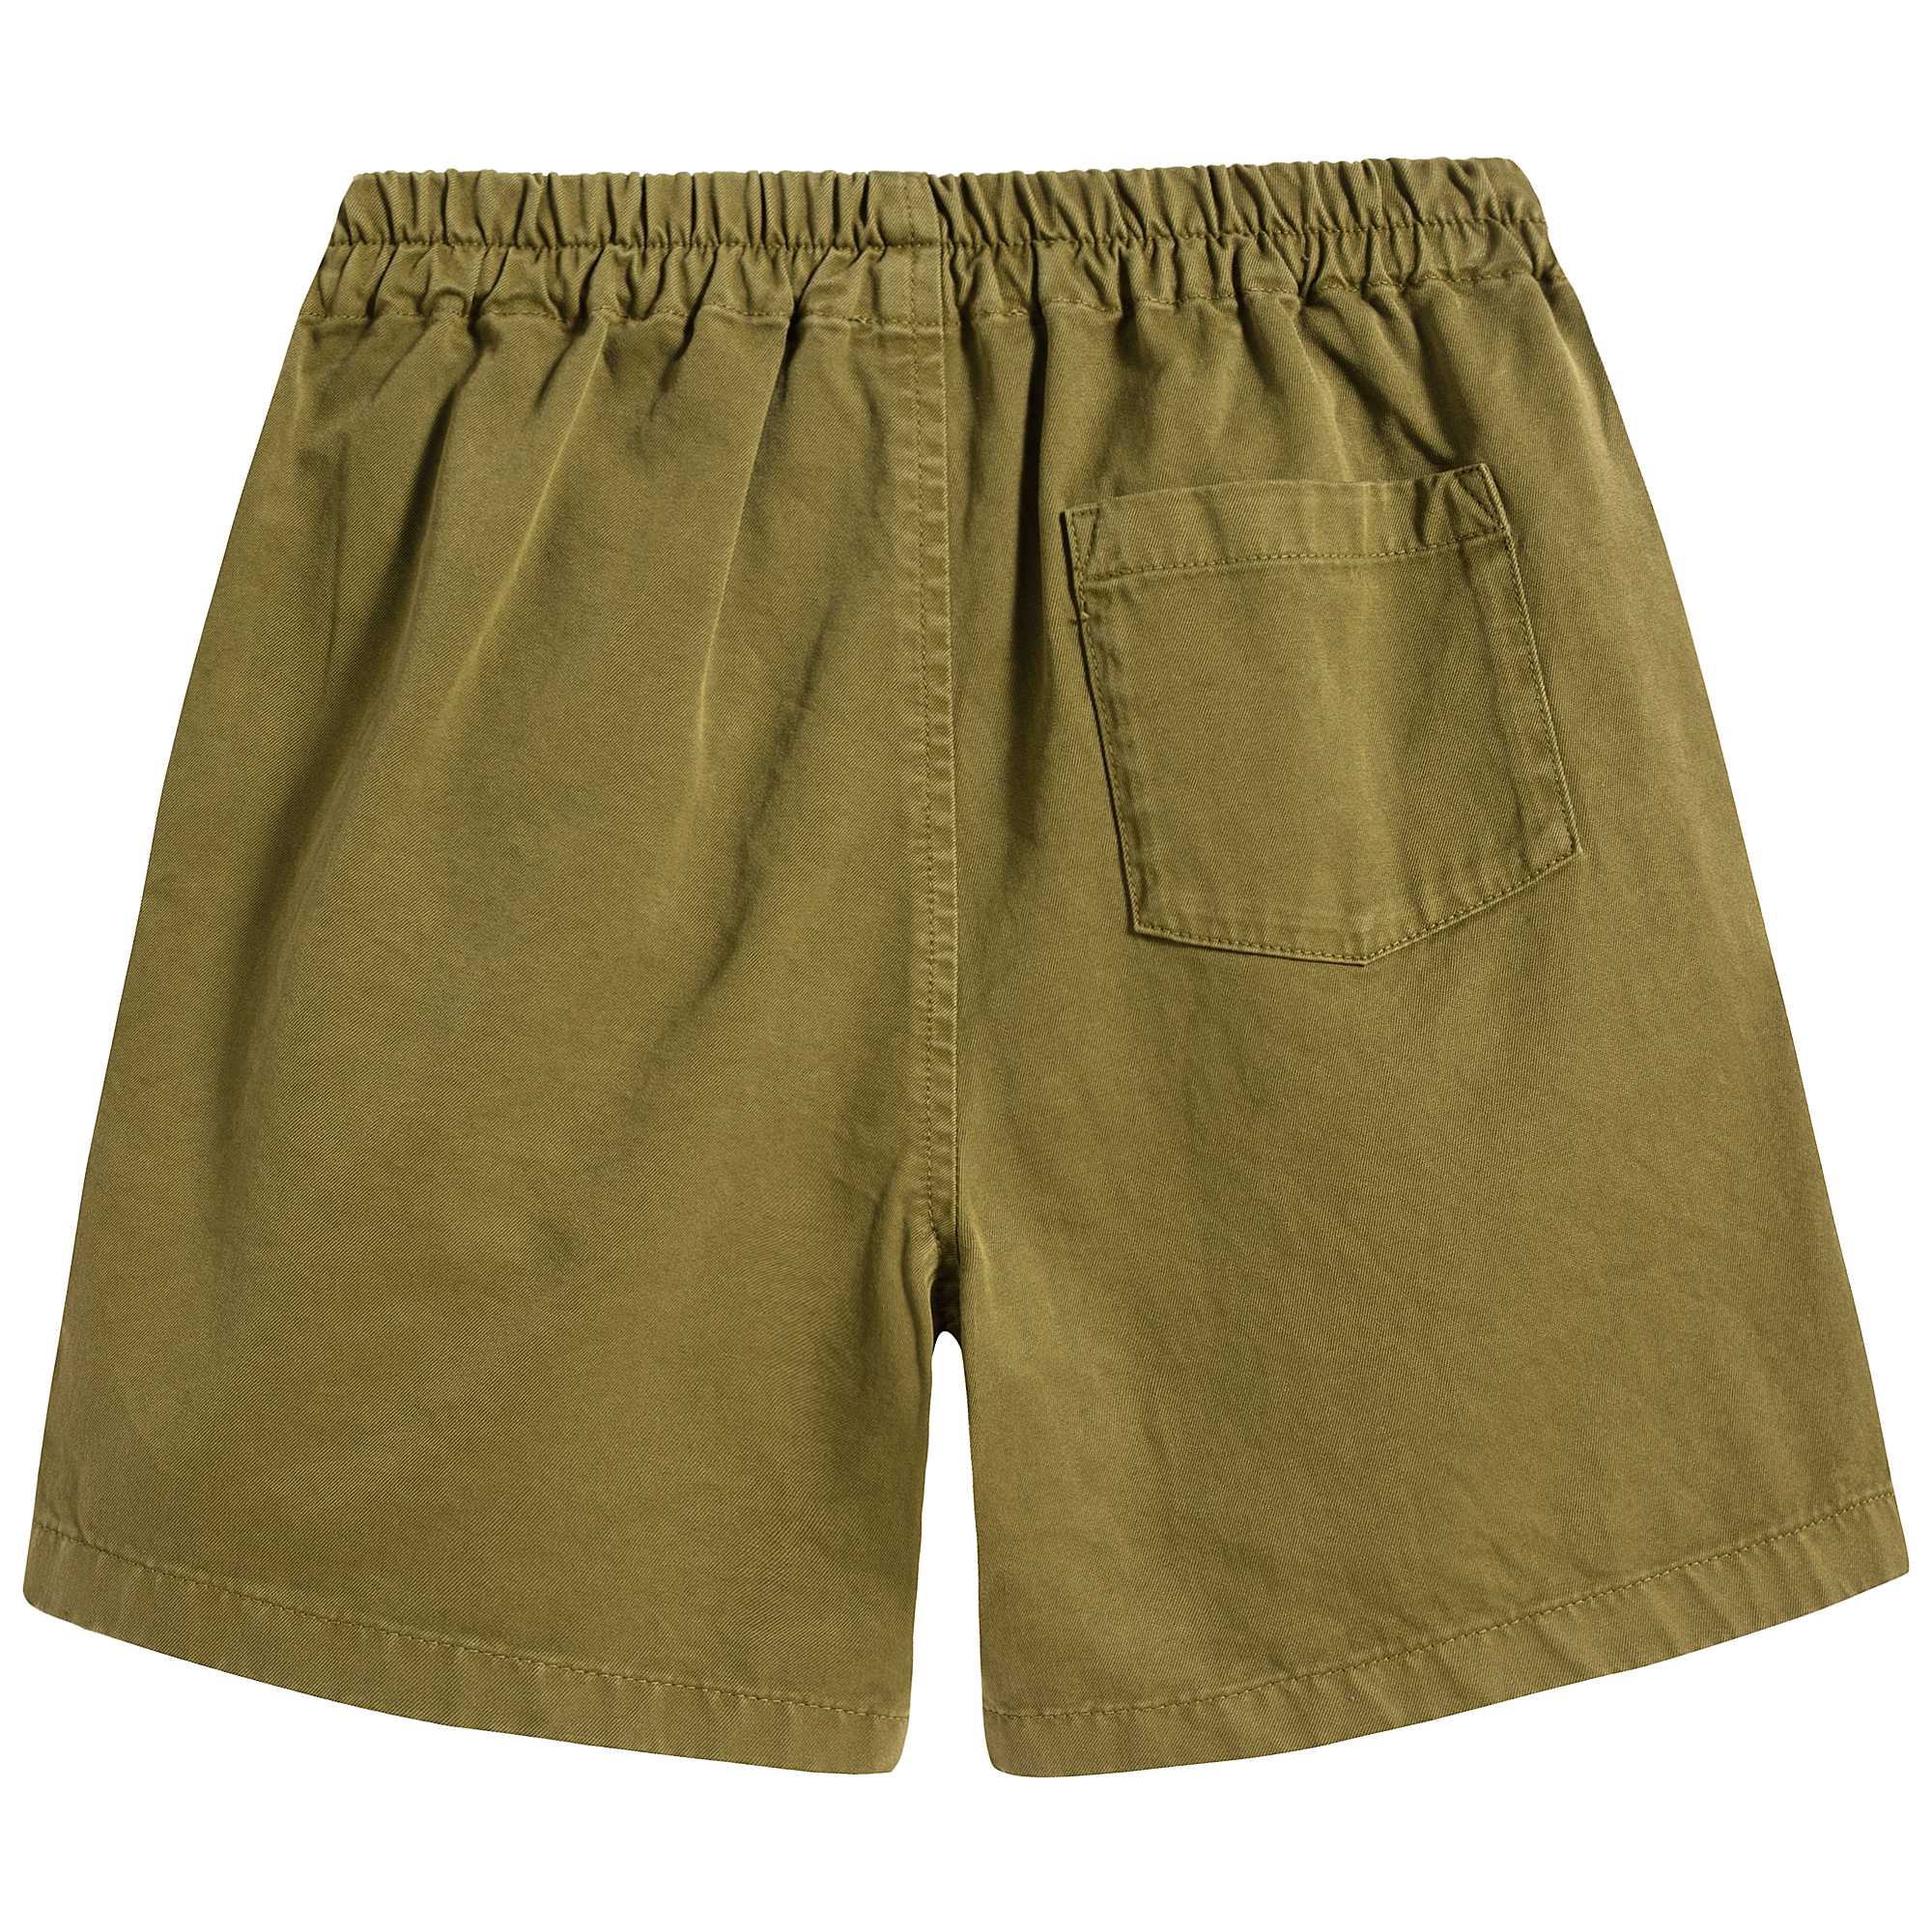 Boys & Girls Green Shorts